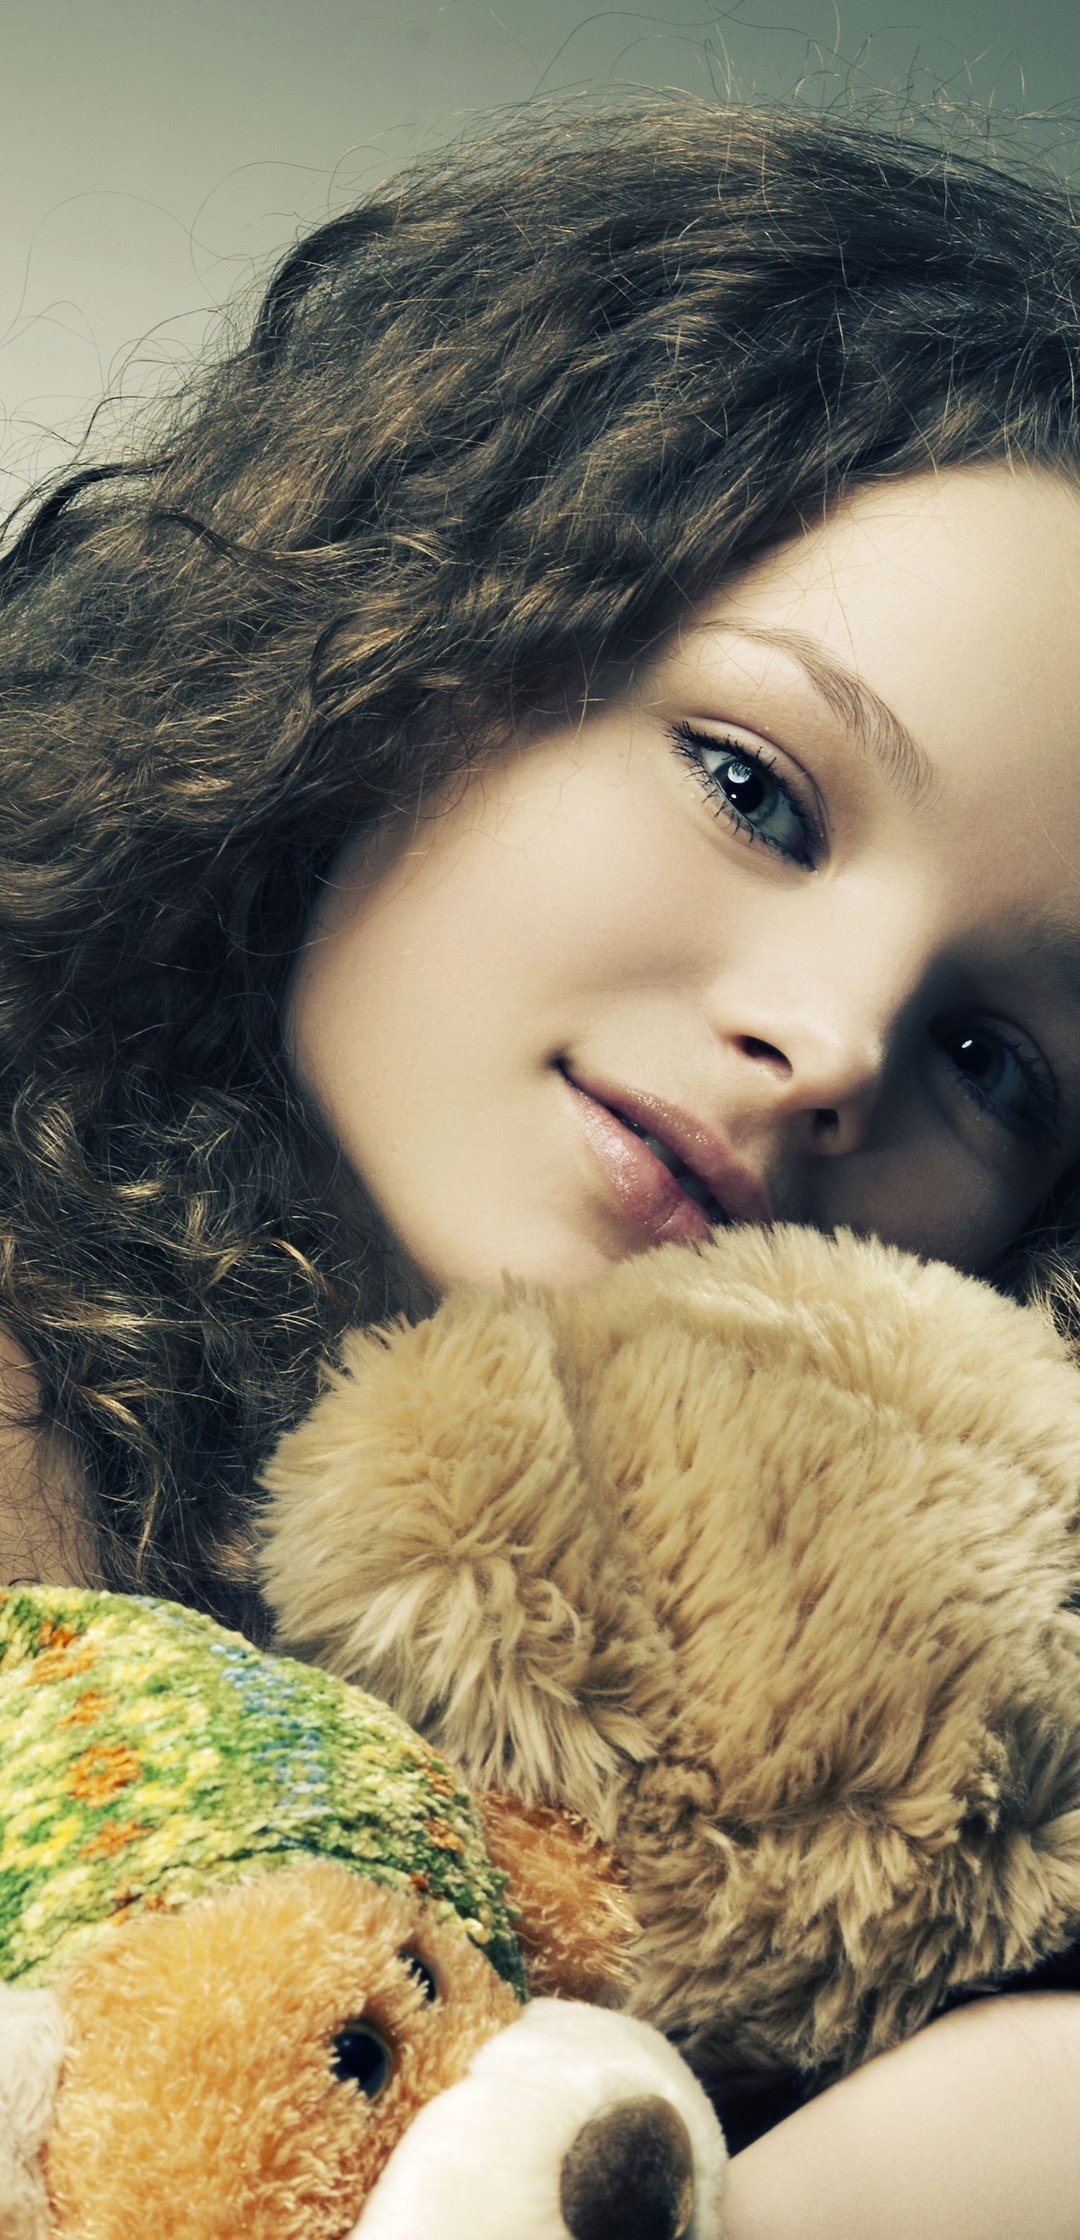 Image: Girl, toys, eyes, smile, hair, curls, bear